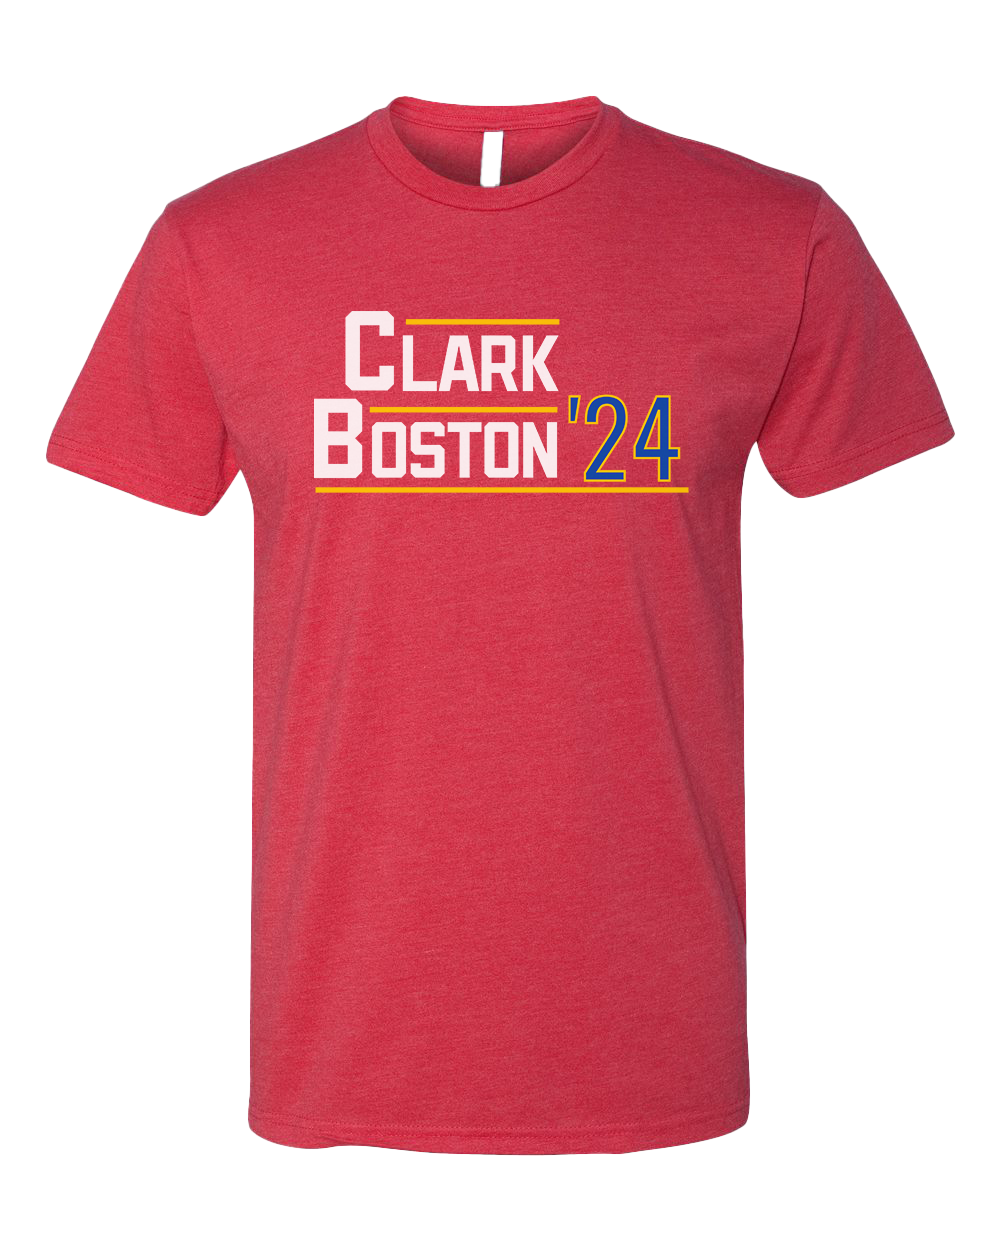 Clark Boston '24 Indiana Basketball Tshirt - Various Colors